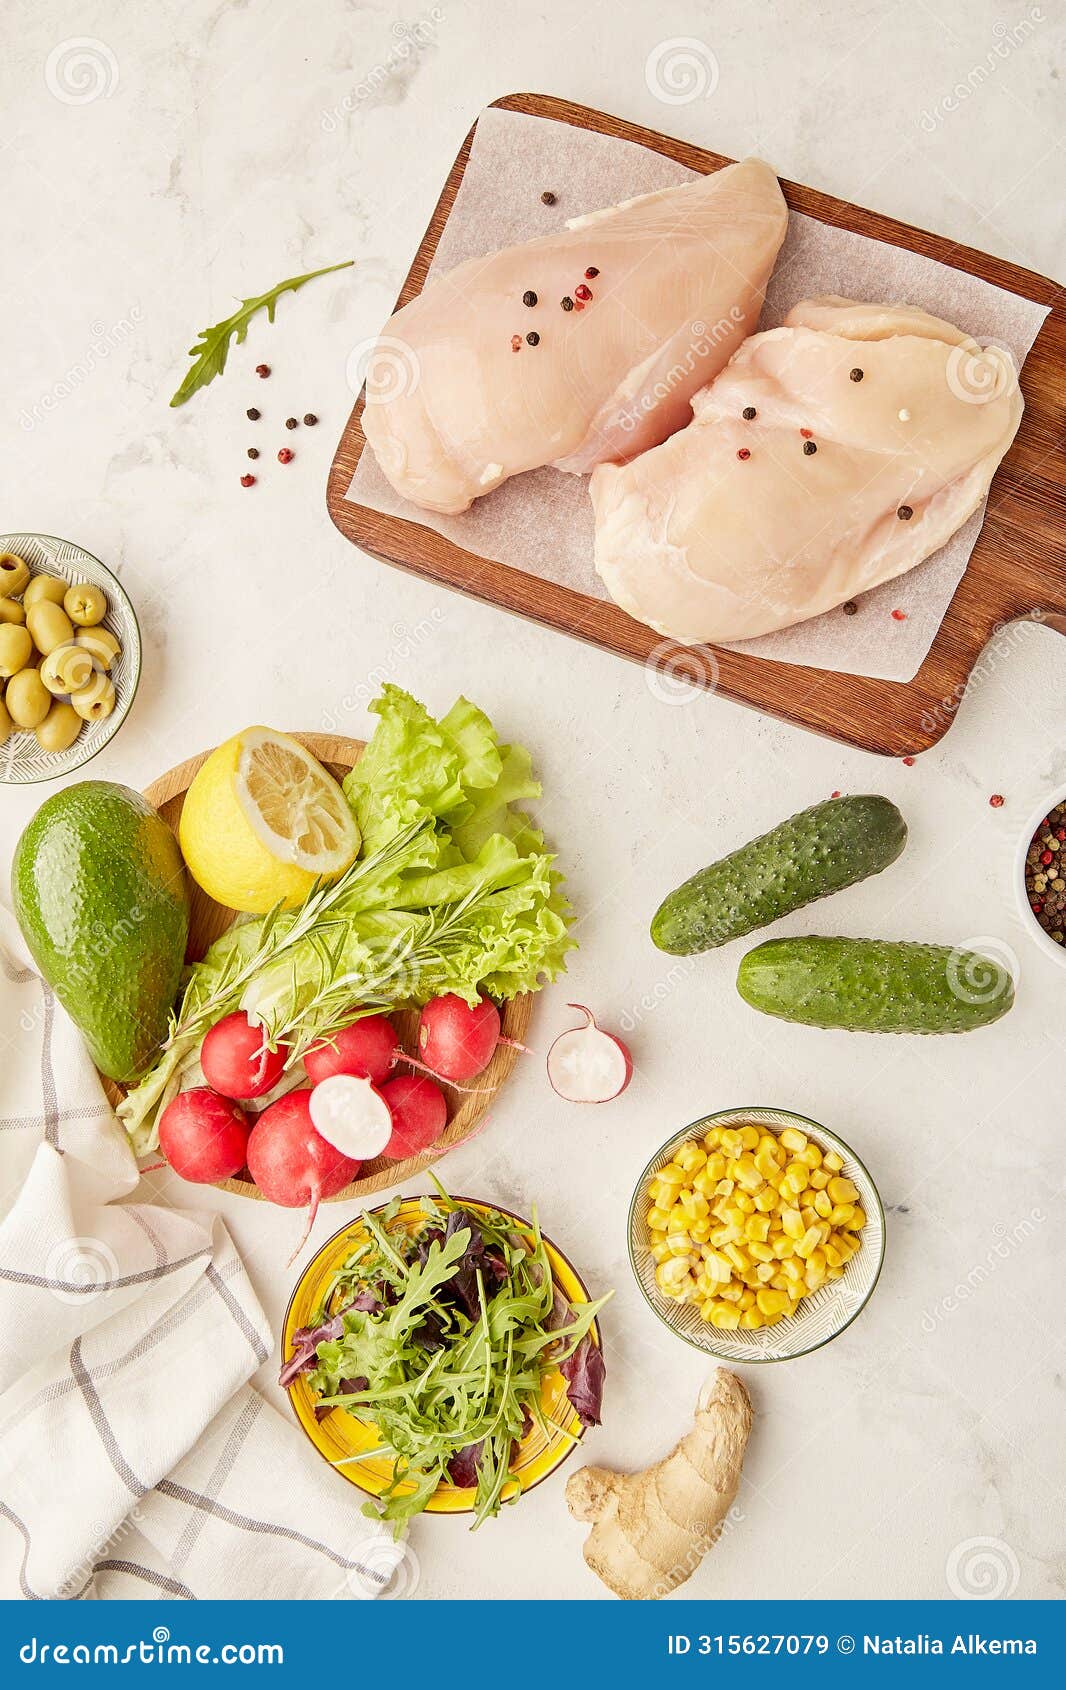 menu fot paleo, fodmap diet concept. fruits,vegetables, olives, chicken meat, greens on wooden cutting board.